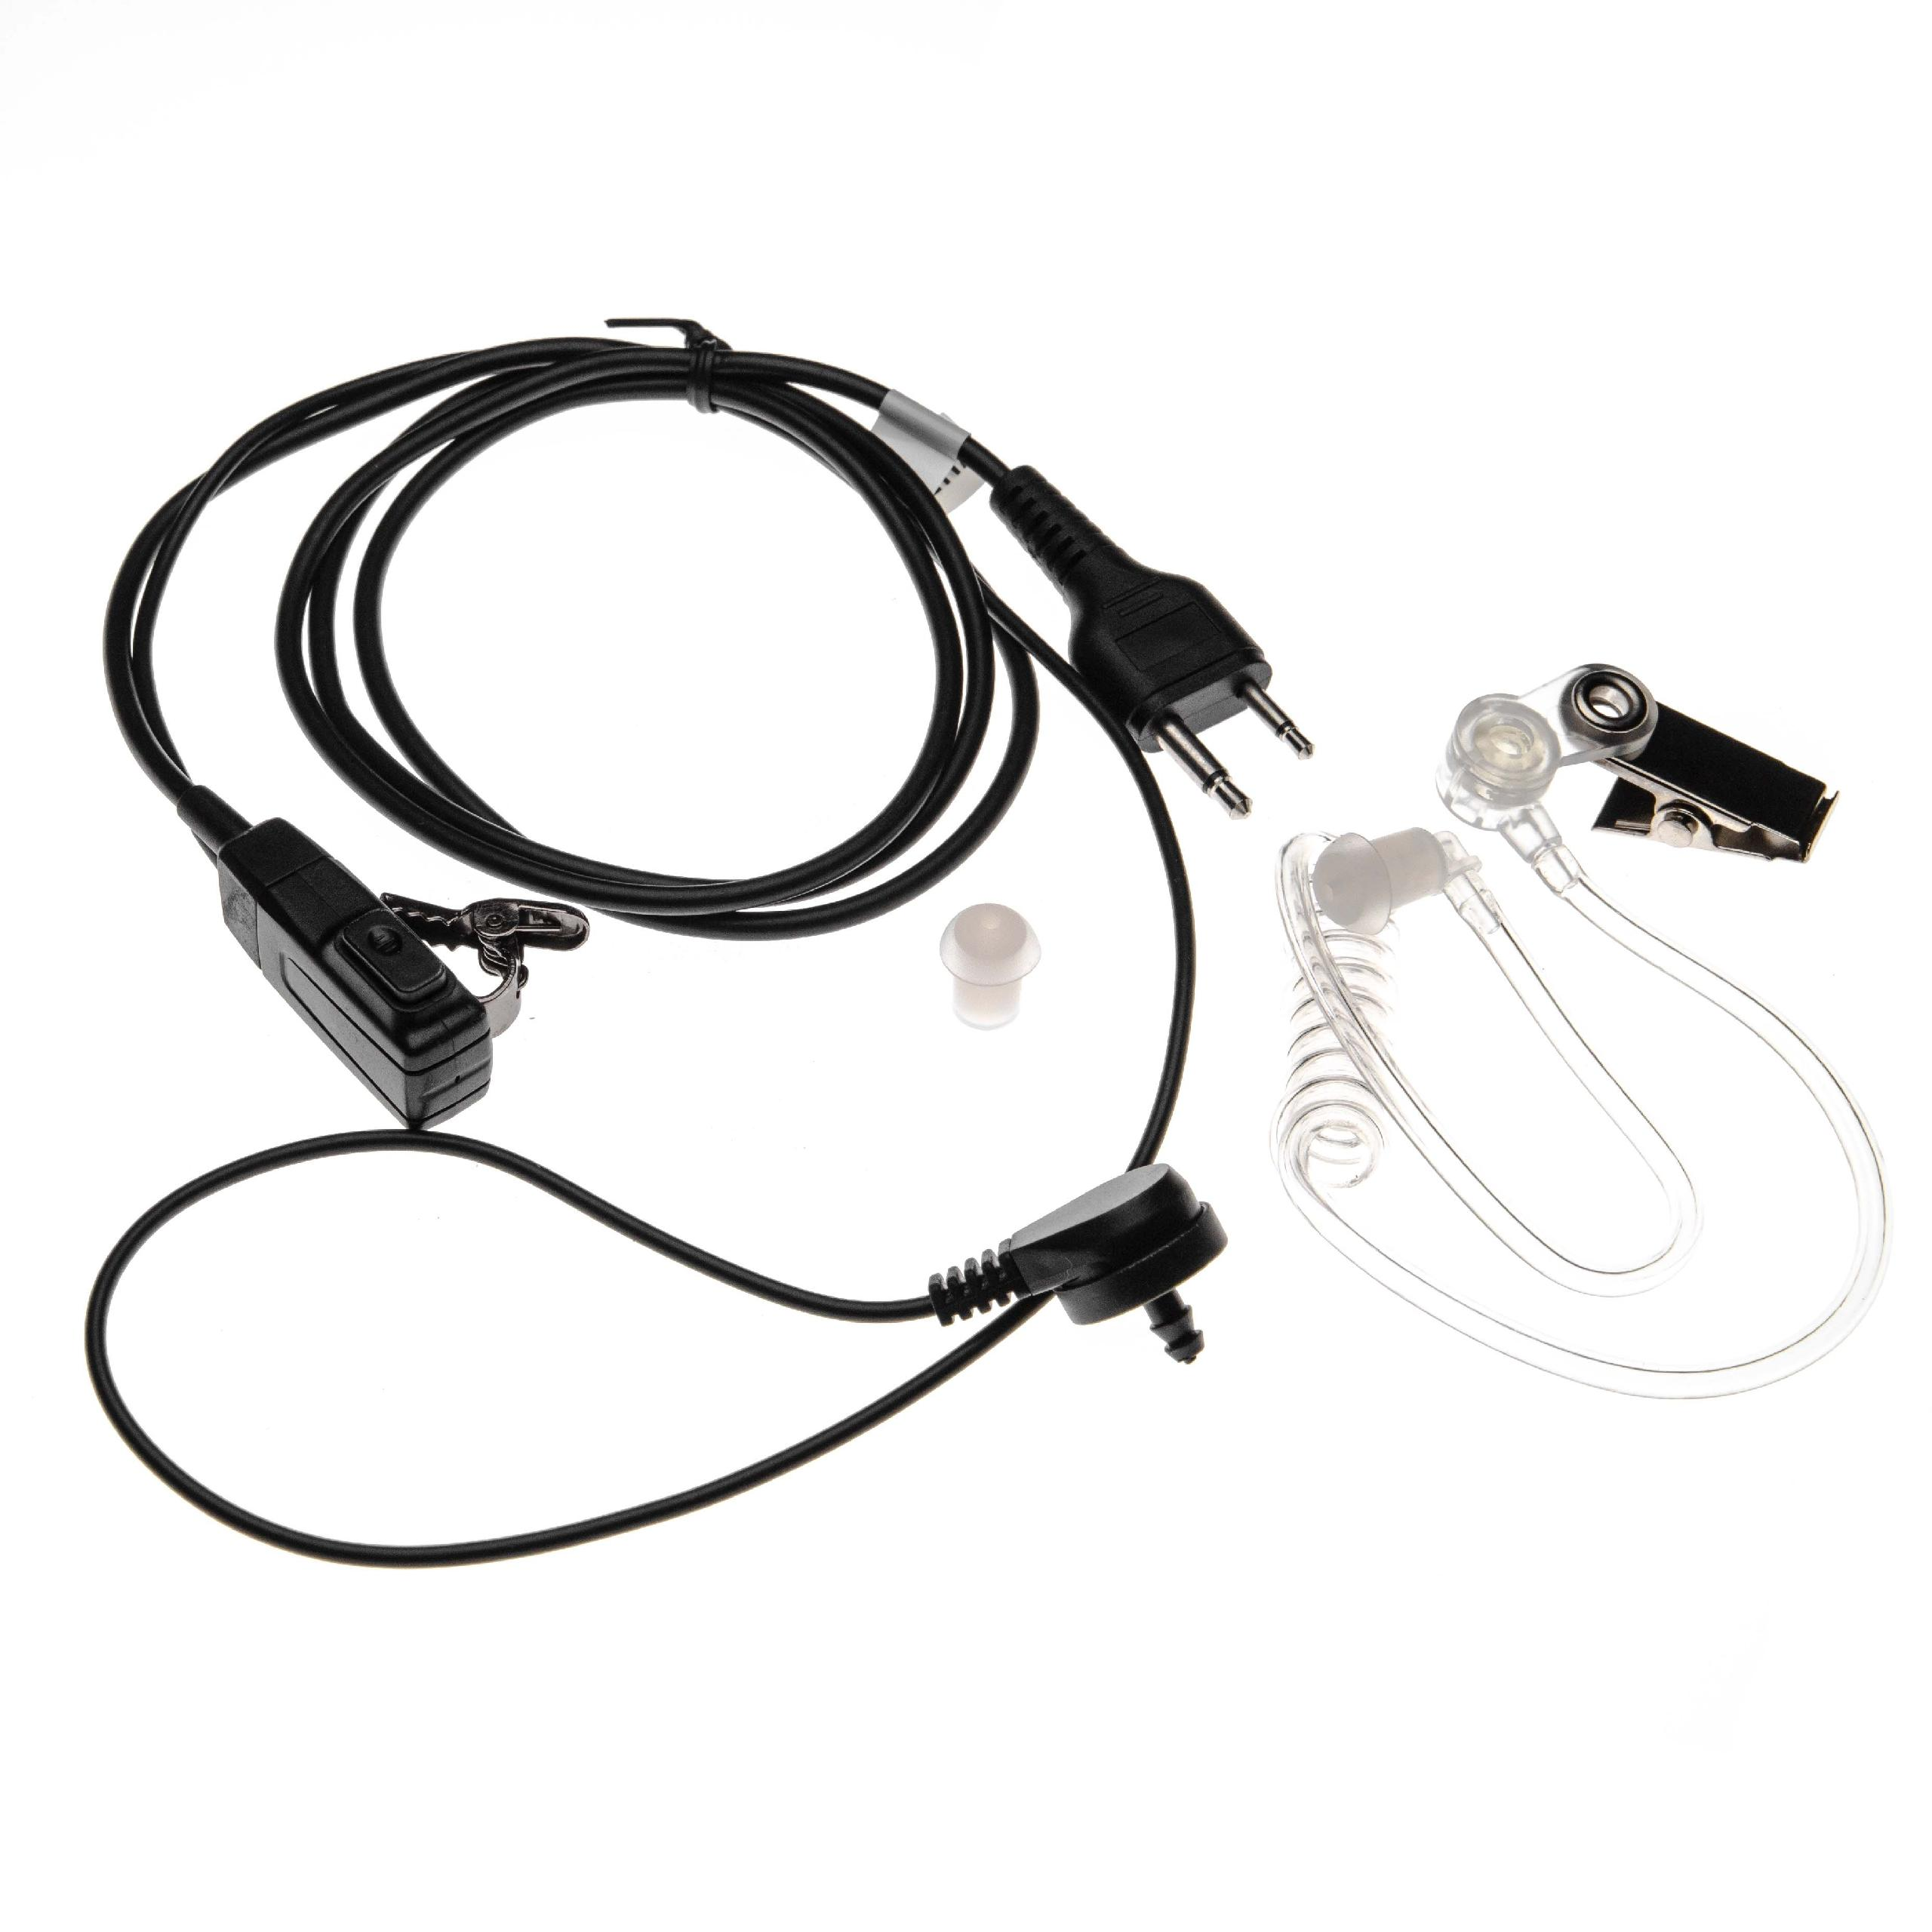 VHBW kompatibel mit IC-M8, Icom On-ear transparent IC-P2ET, IC-M7, IC-M5, schwarz / IC-P2AT, IC-P4A, IC-P3AT, IC-P2E, IC-P2A, Headset IC-M9